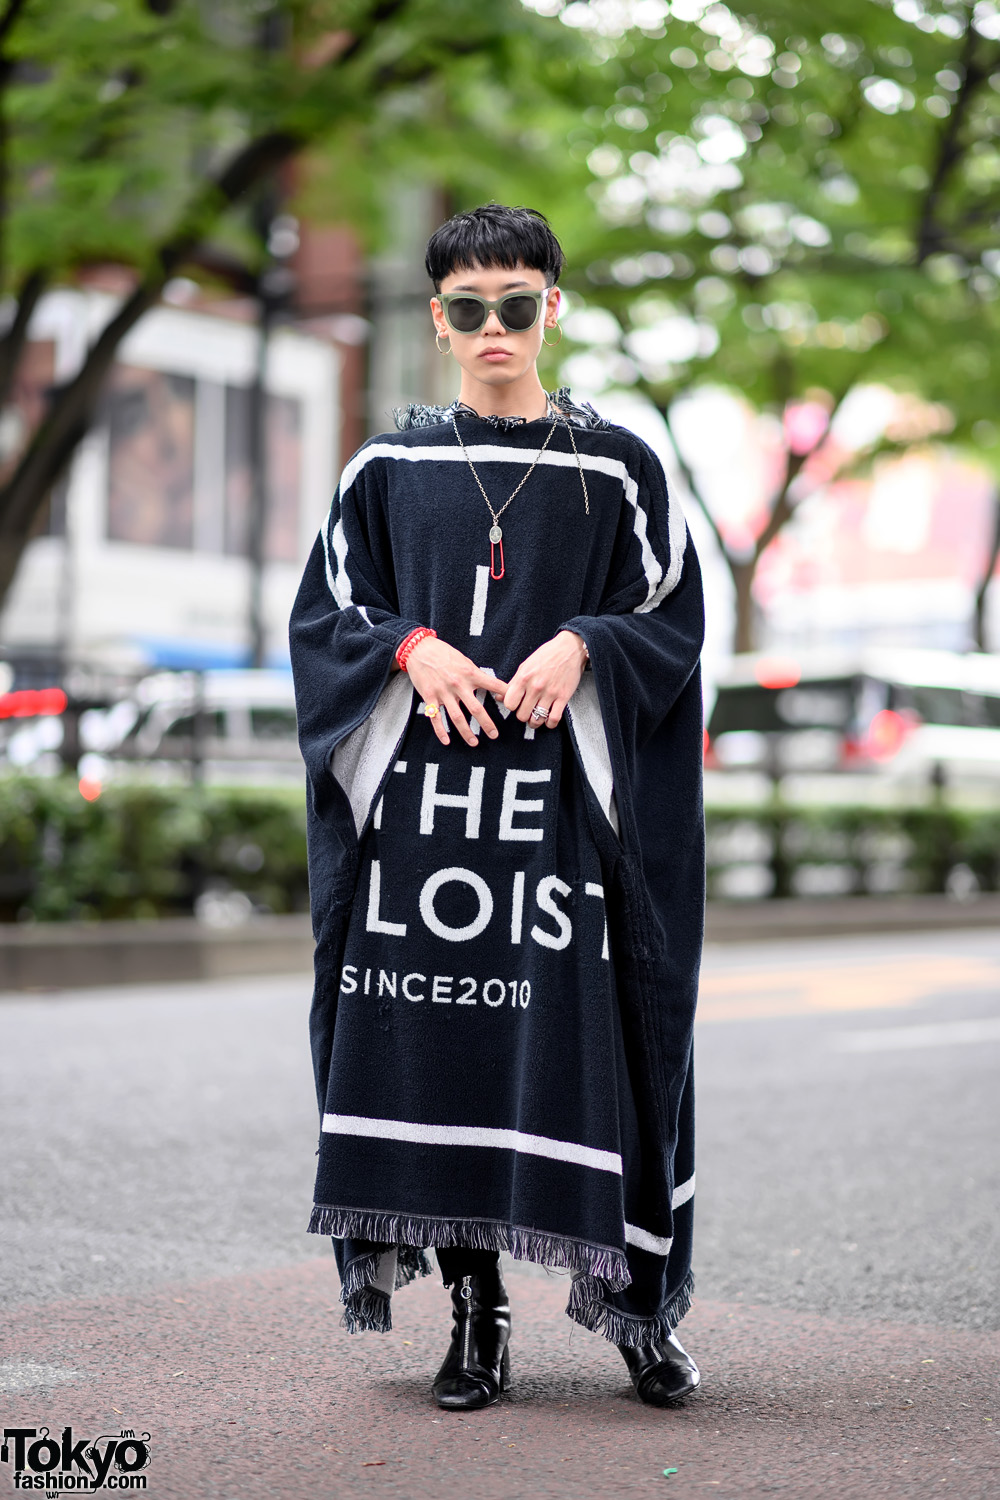 Stay Real Harajuku - Taiwanese Streetwear Comes to Japan